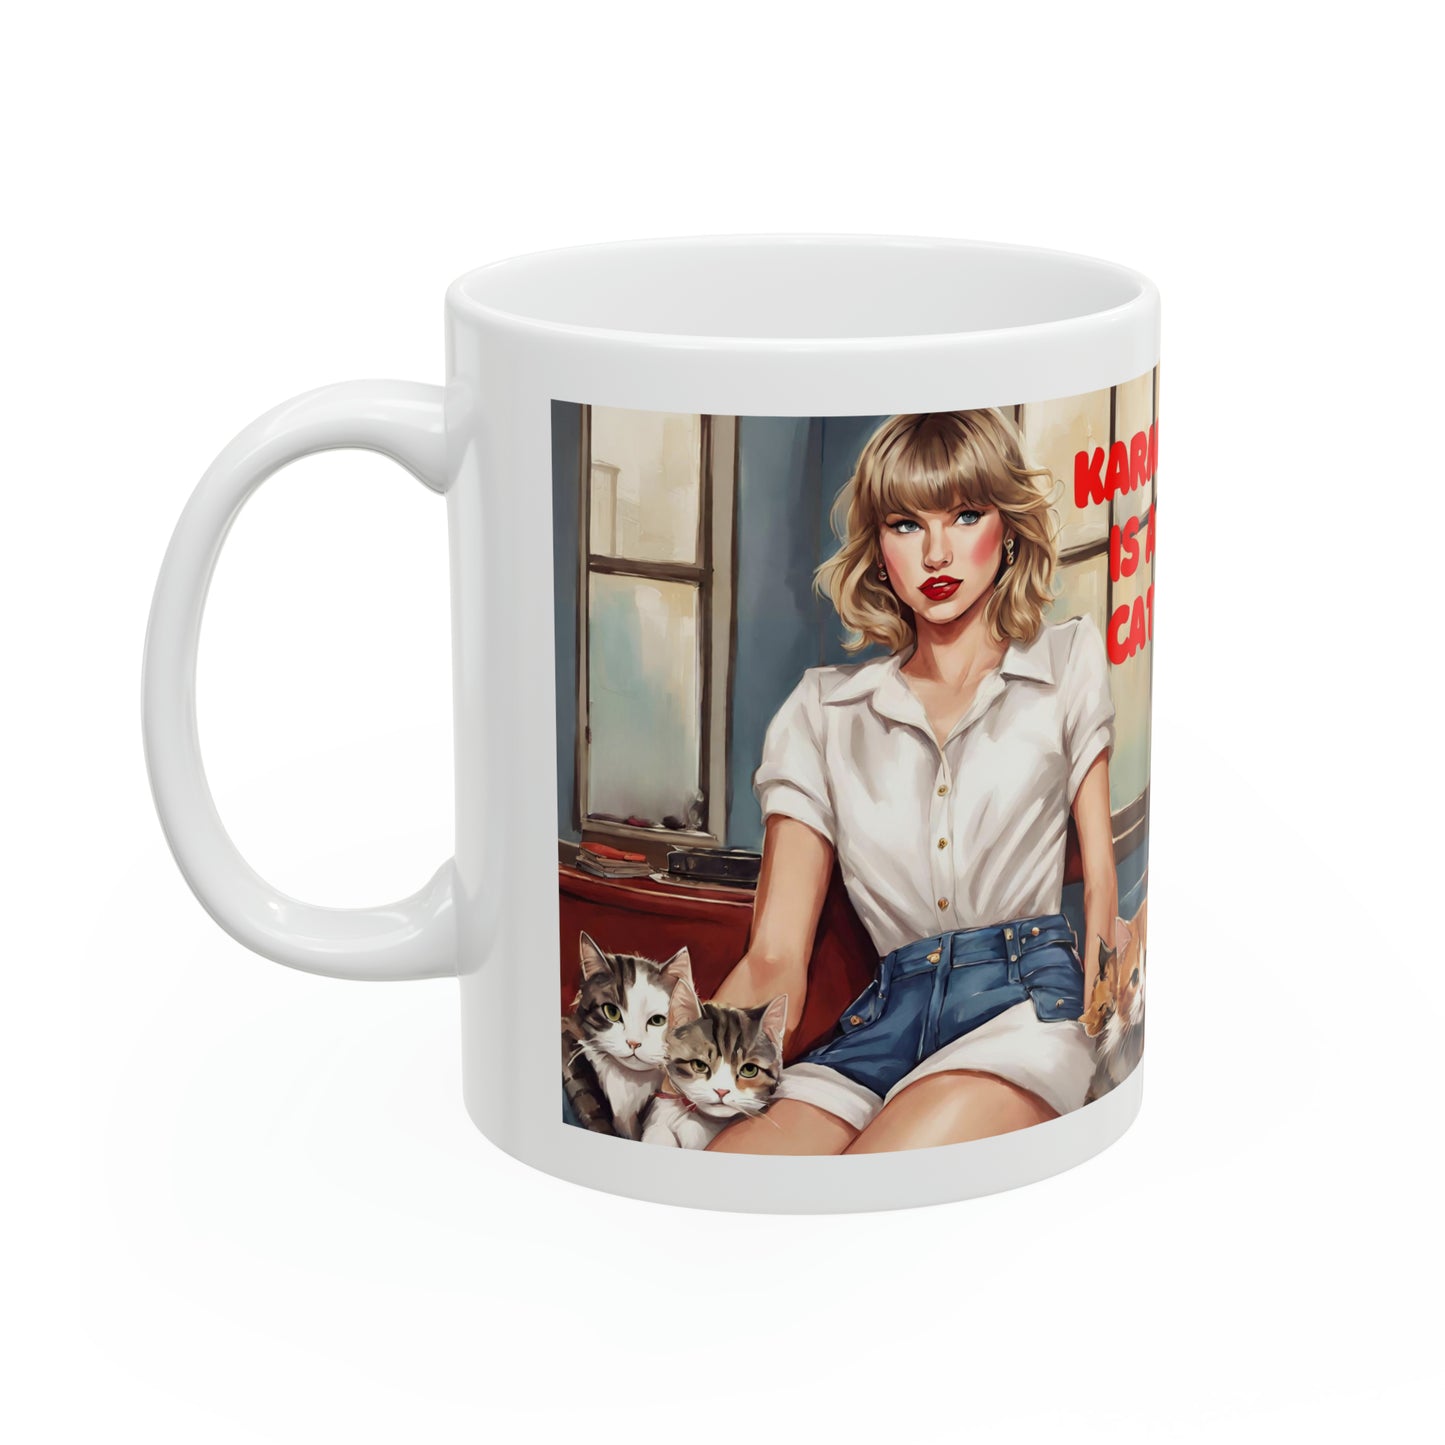 Karma is a Cat (2) Ceramic Coffee Mug 11oz | Taylor Swiftie Merch | Album Mug for Swiftie Fans | Gift for Swifties